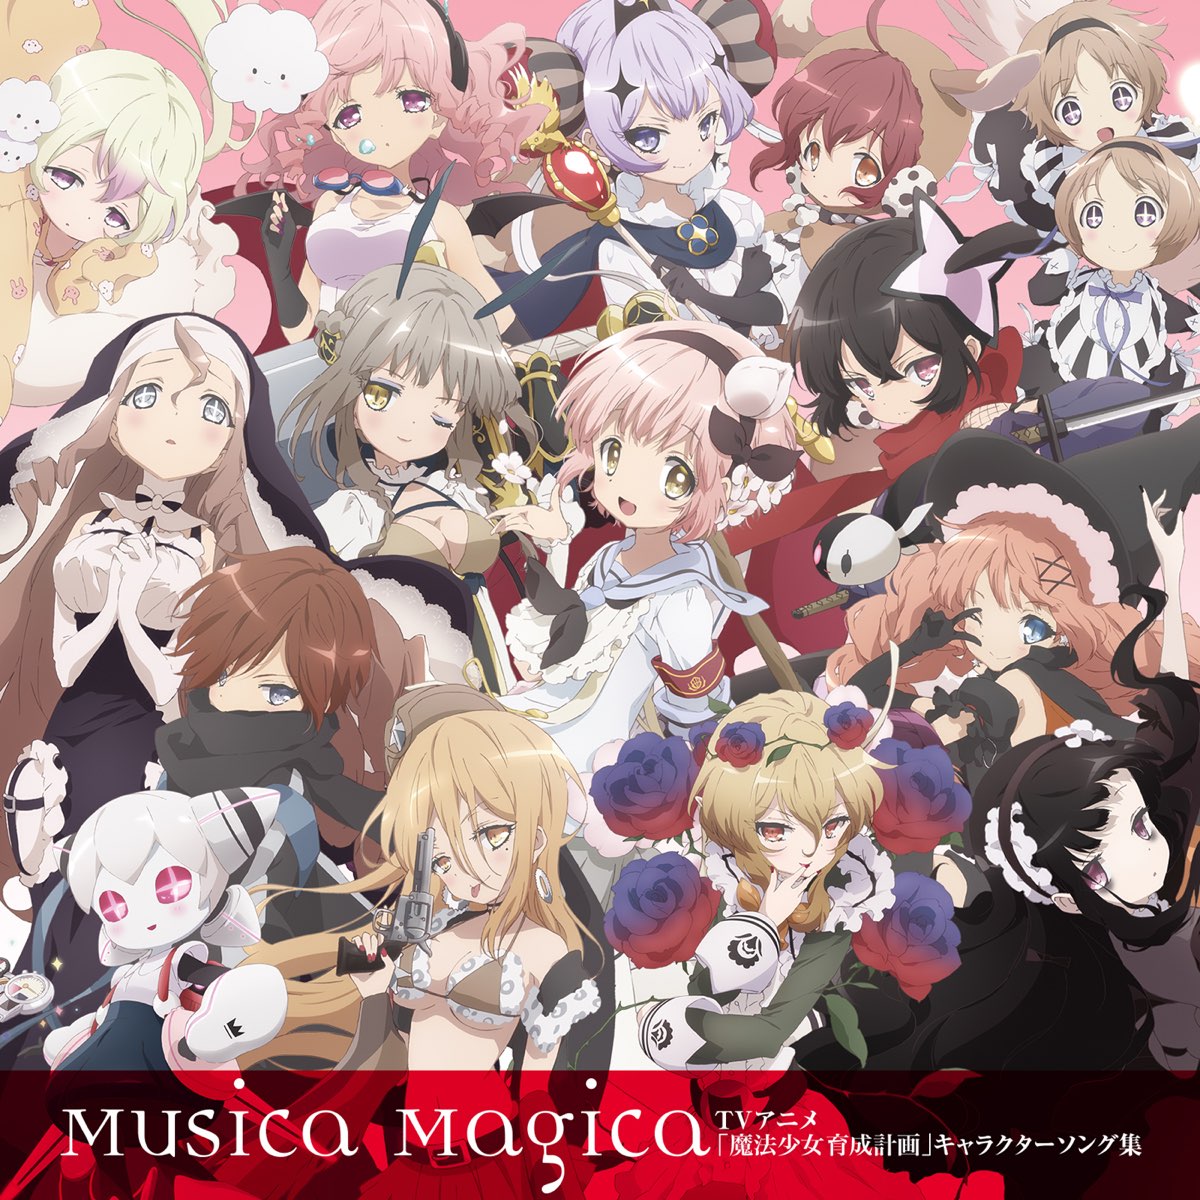 Various Artistsの 魔法少女育成計画 キャラクターソング集 Musica Magica をapple Musicで